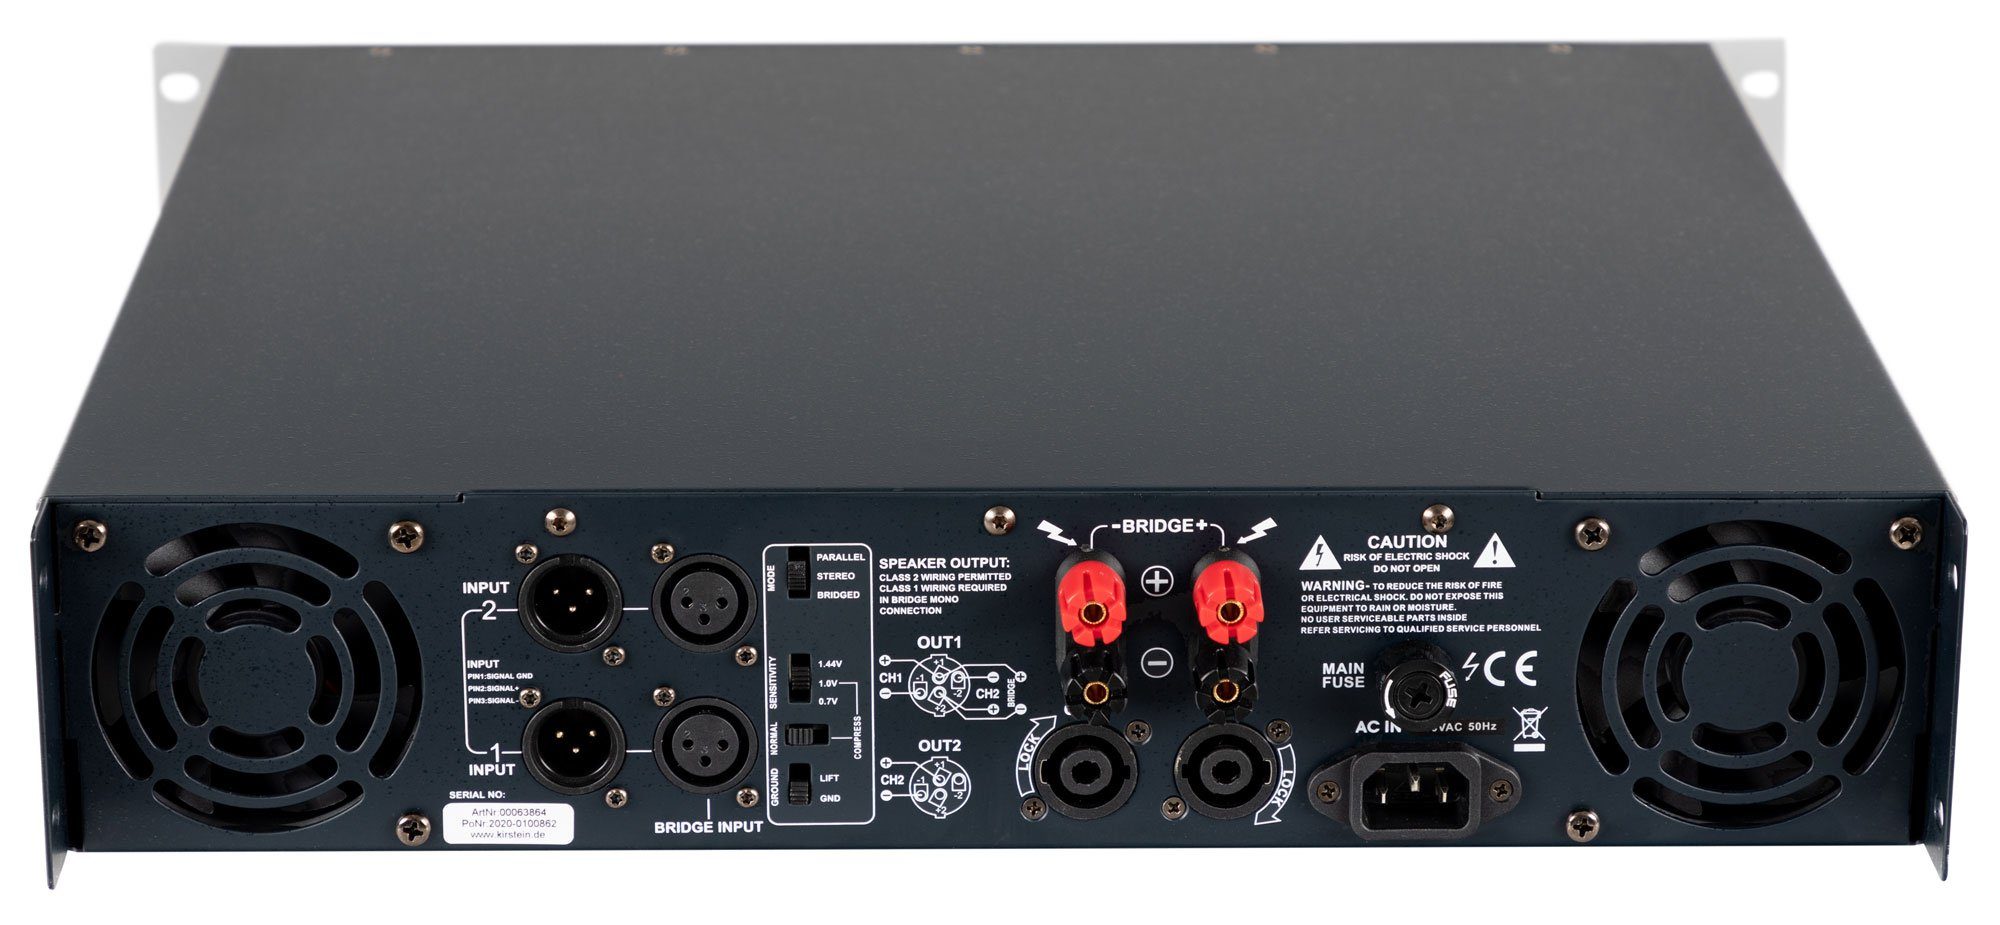 2 W, Stereo-Leistungsverstärker an Schraubklemmen, 500 Watt Endstufe Pronomic Lautsprecher- 1000 Kanal TL-200 2x Kanäle: 2 Verstärker (Anzahl Ohm) mit